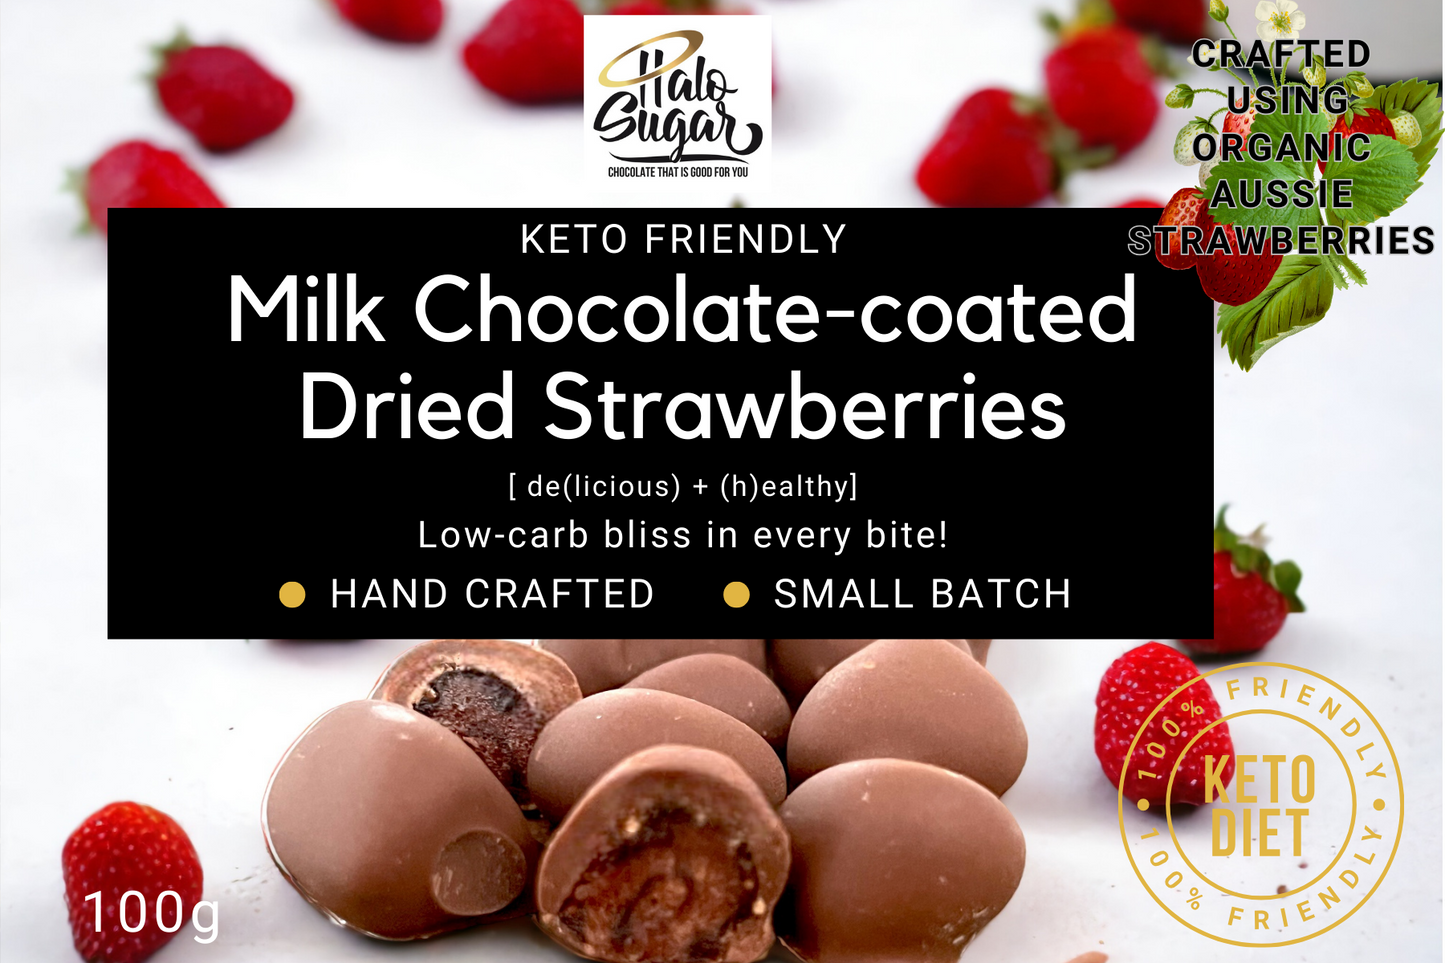 Handcrafted Keto Milk Chocolate - Chocolate Coated Dried Organic Strawberries